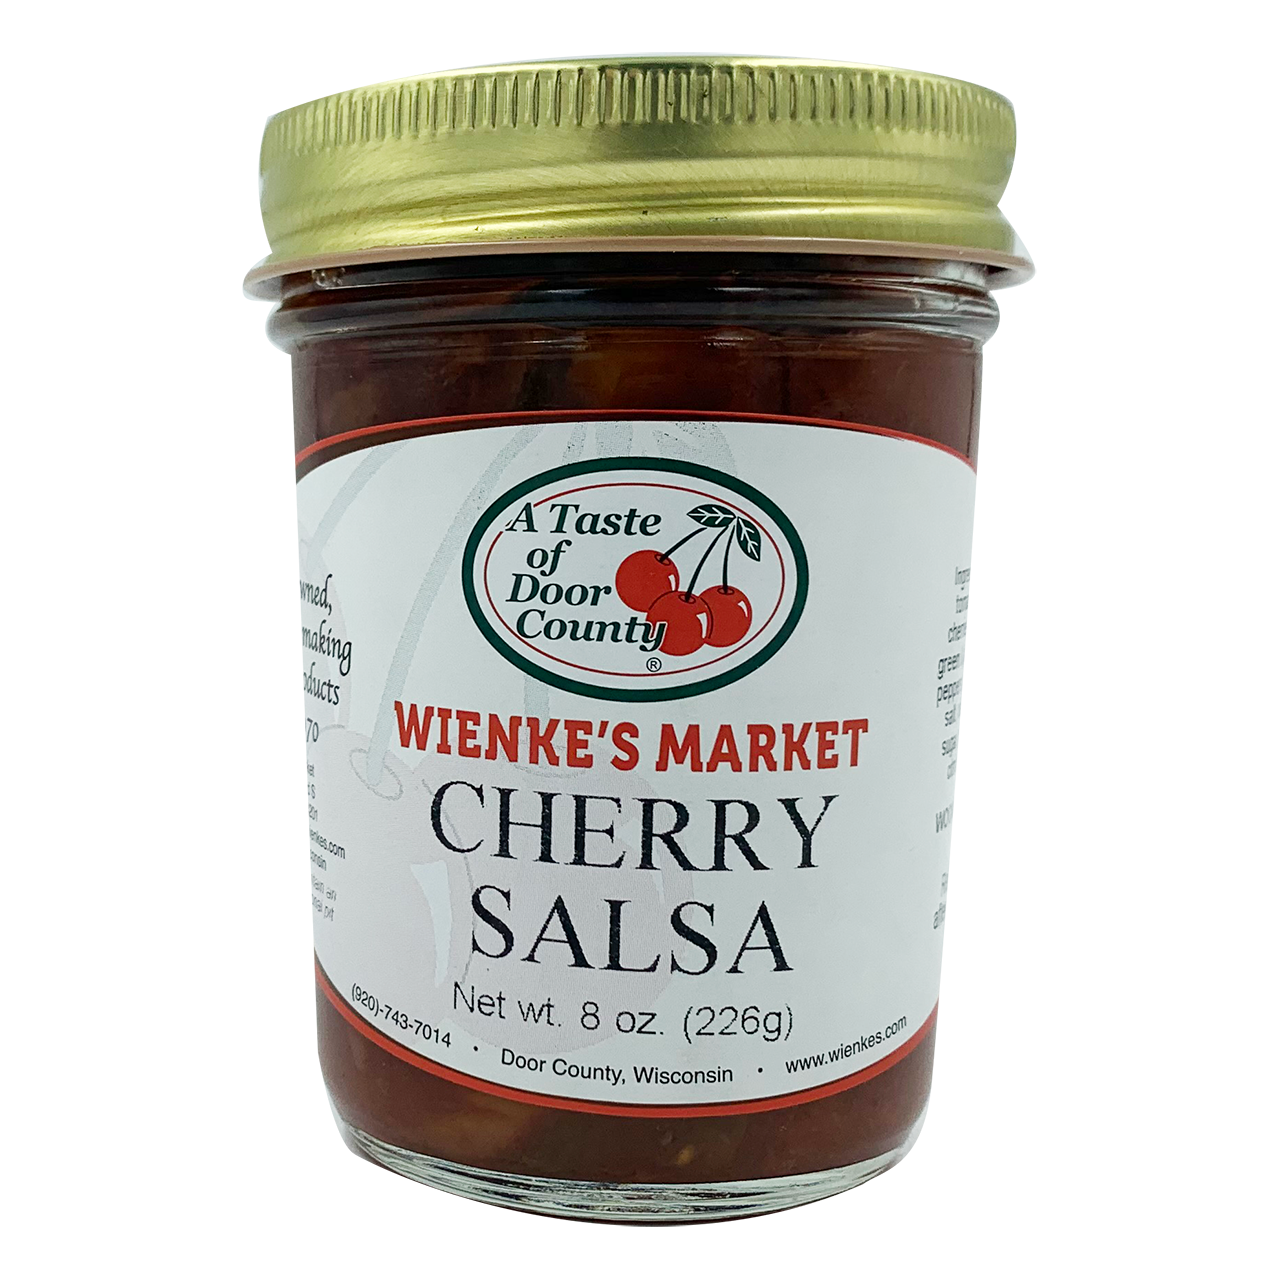 Cherry Salsa